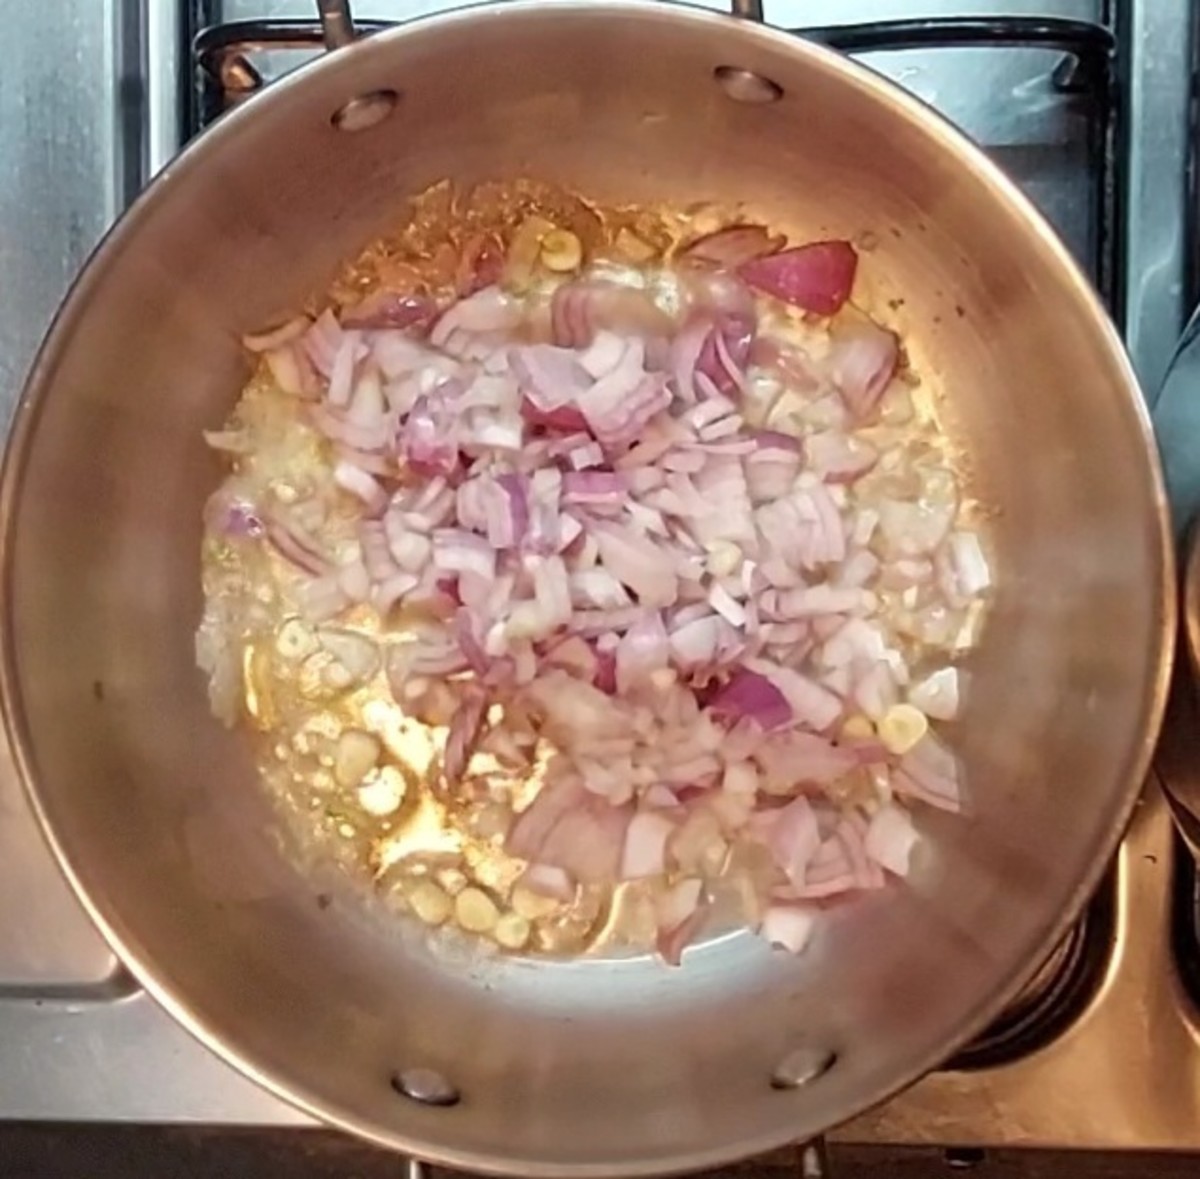 Add 1 chopped onion.